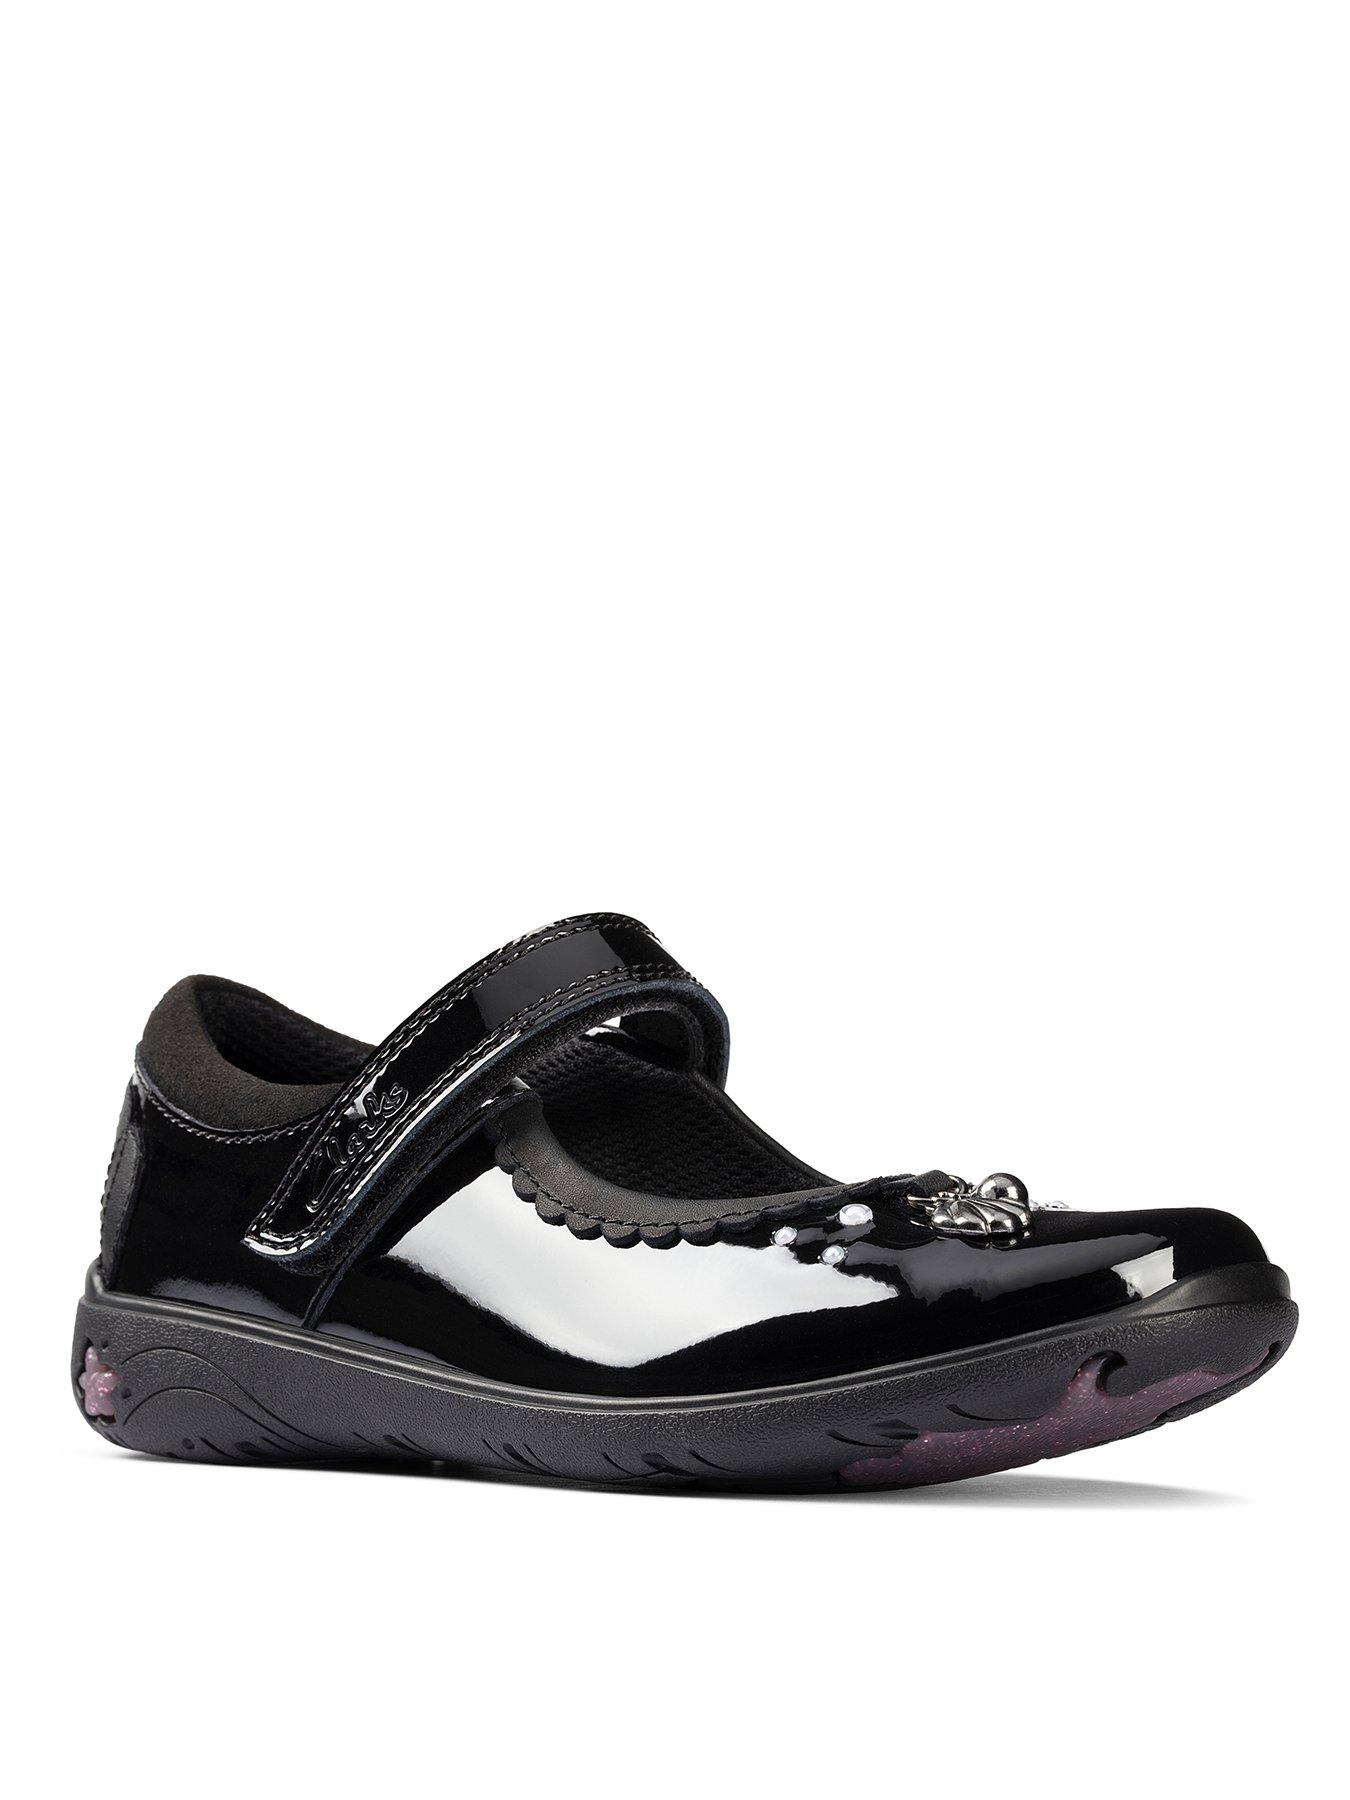  Kid Sea Shimmer Mary Jane School Shoe - Black Patent